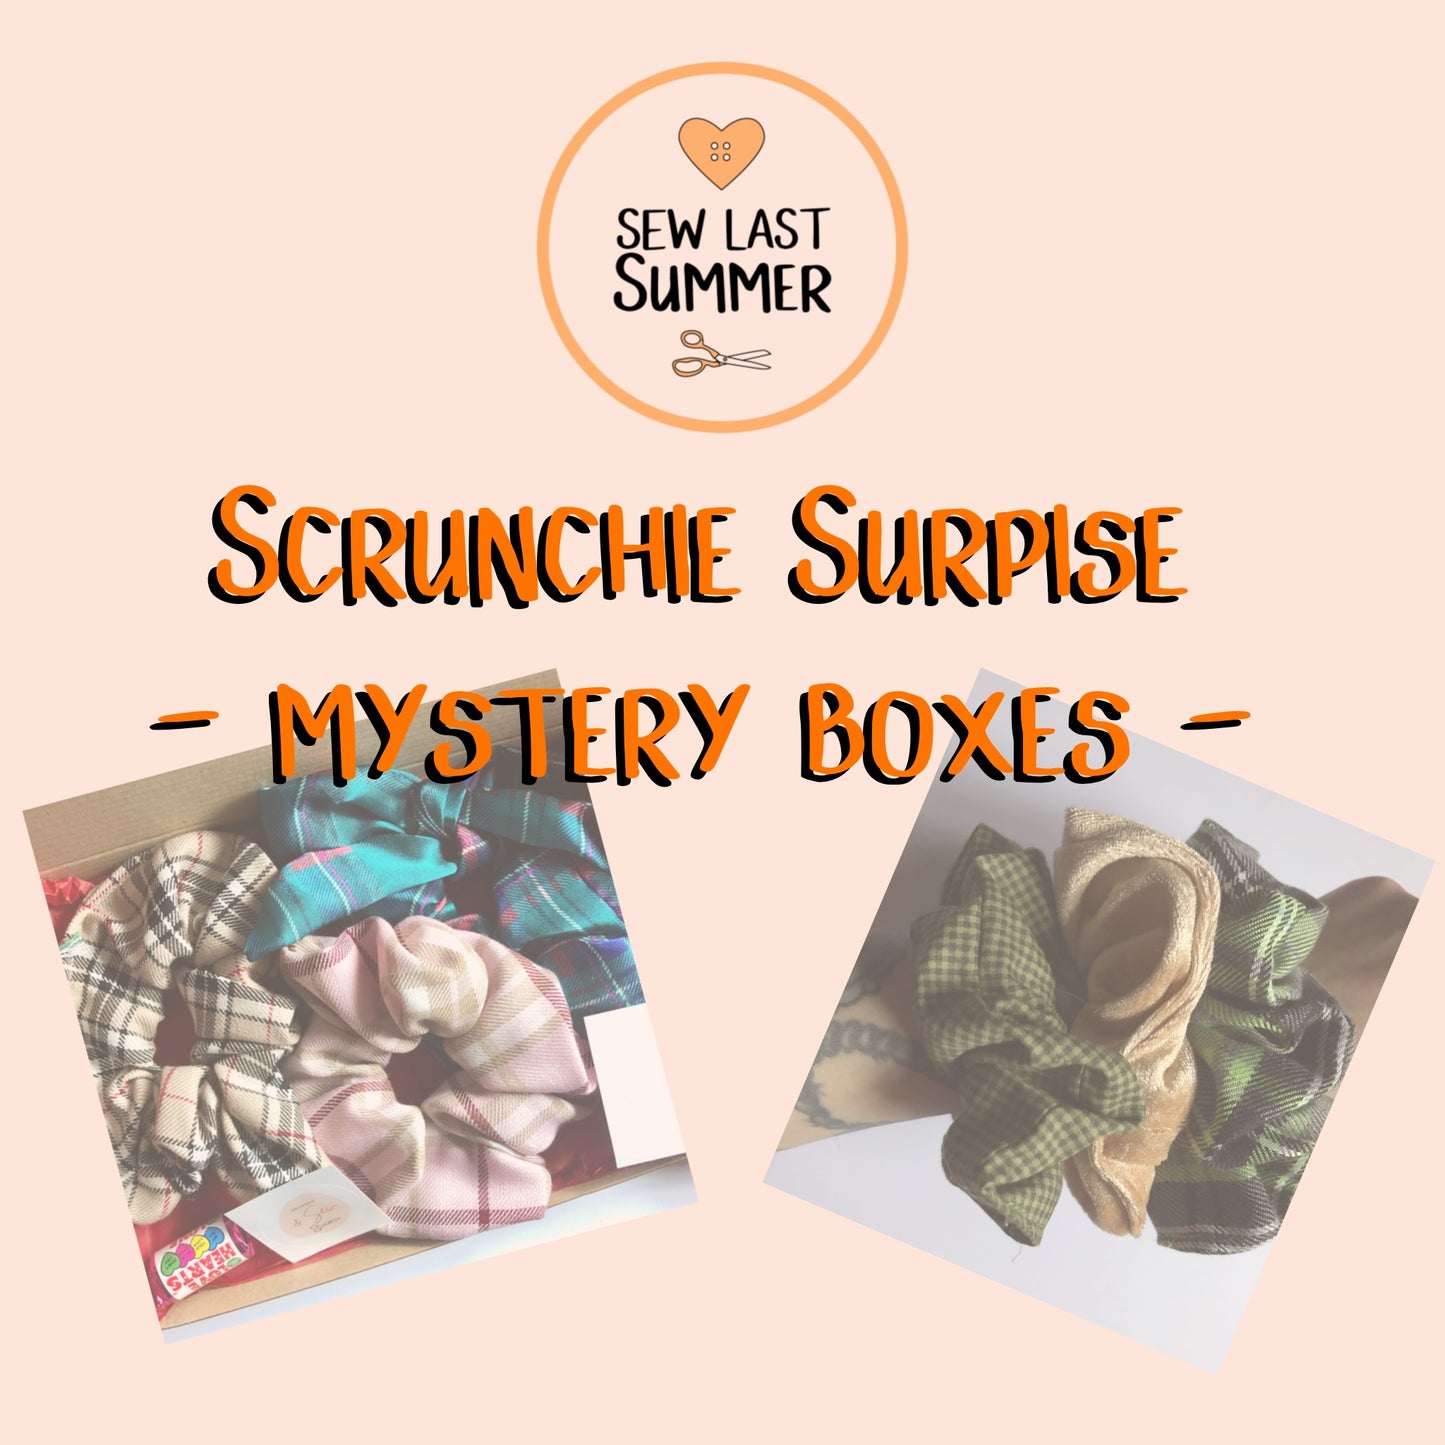 Scrunchie Mystery Box - Large Size